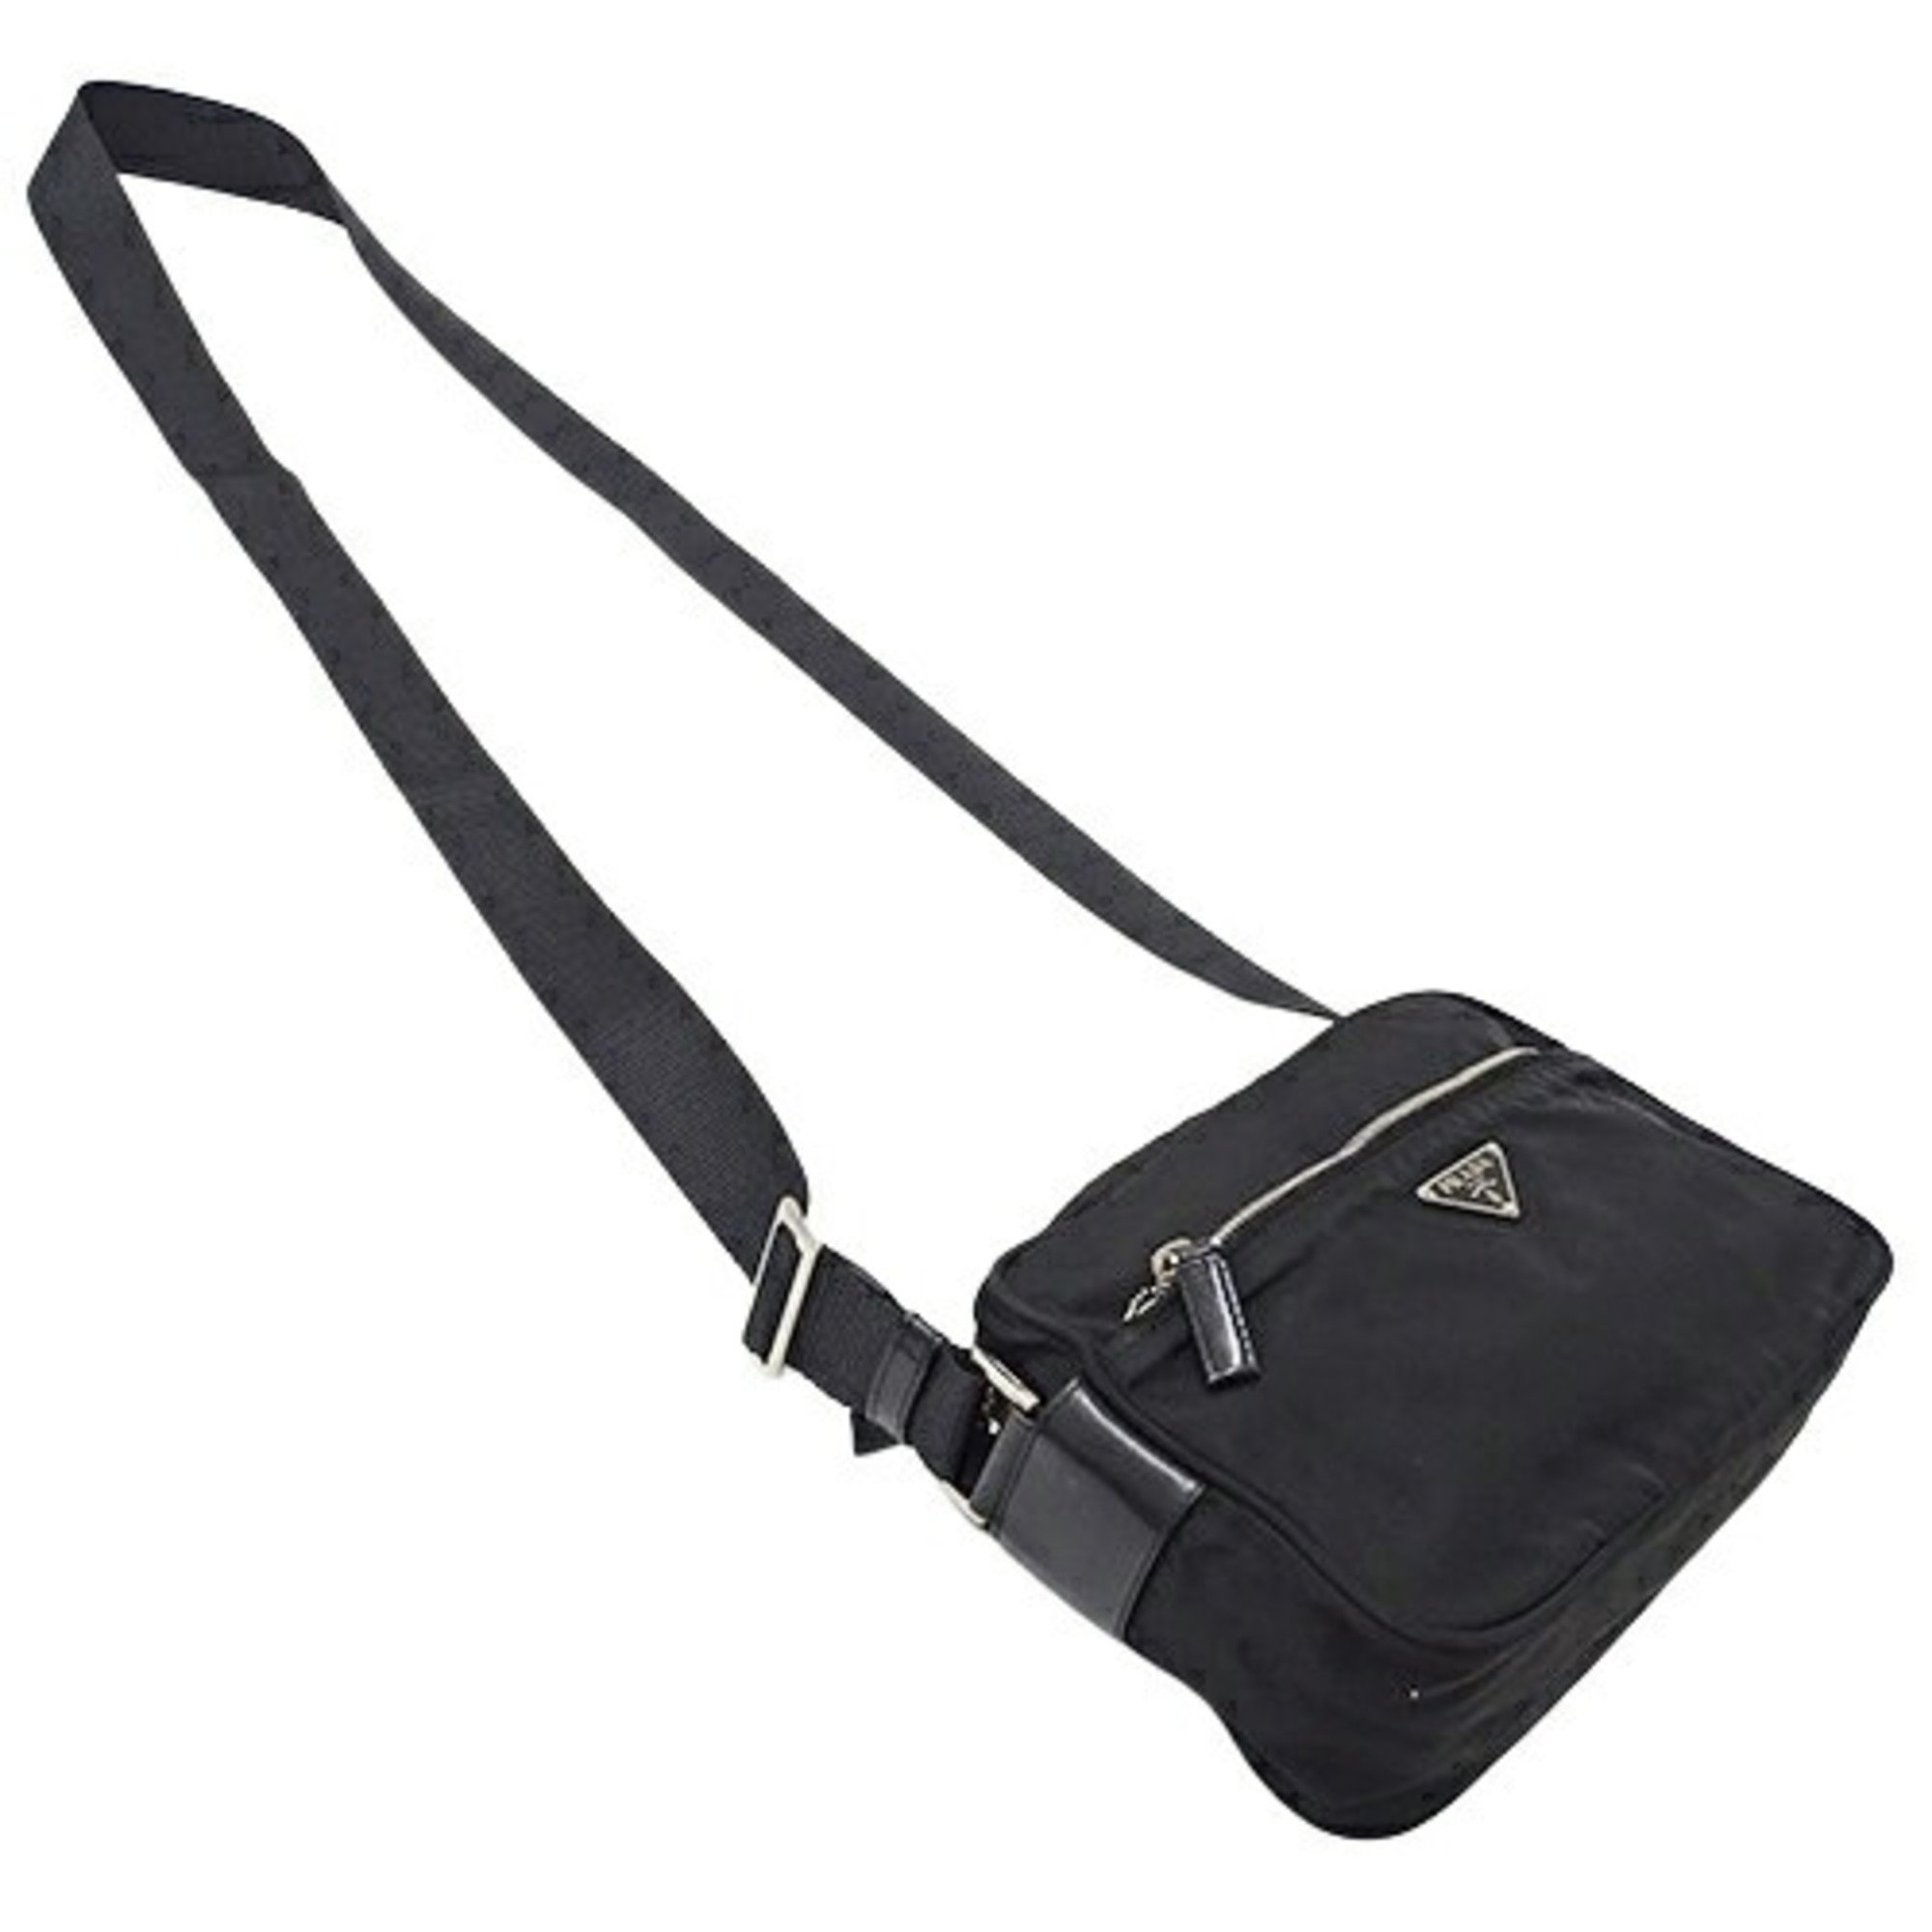 PRADA Women's Shoulder Bag Nylon Black BT0166 Compact